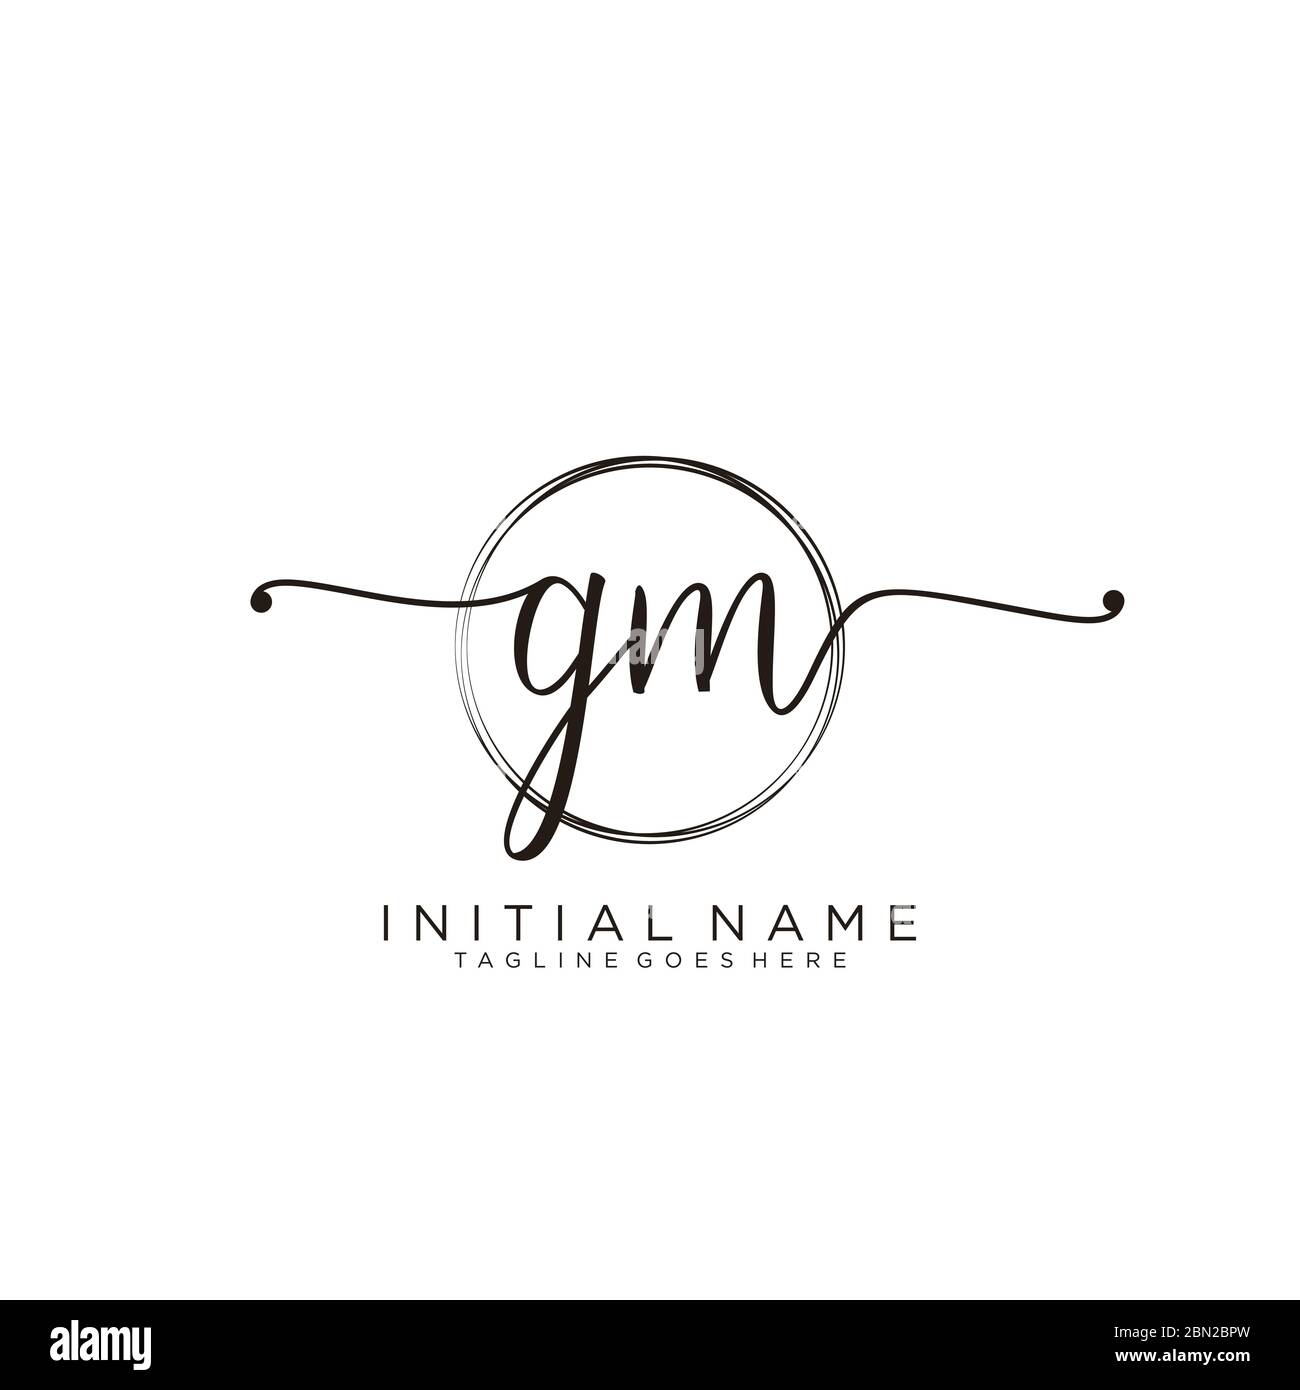 Gm logo Black and White Stock Photos & Images - Alamy